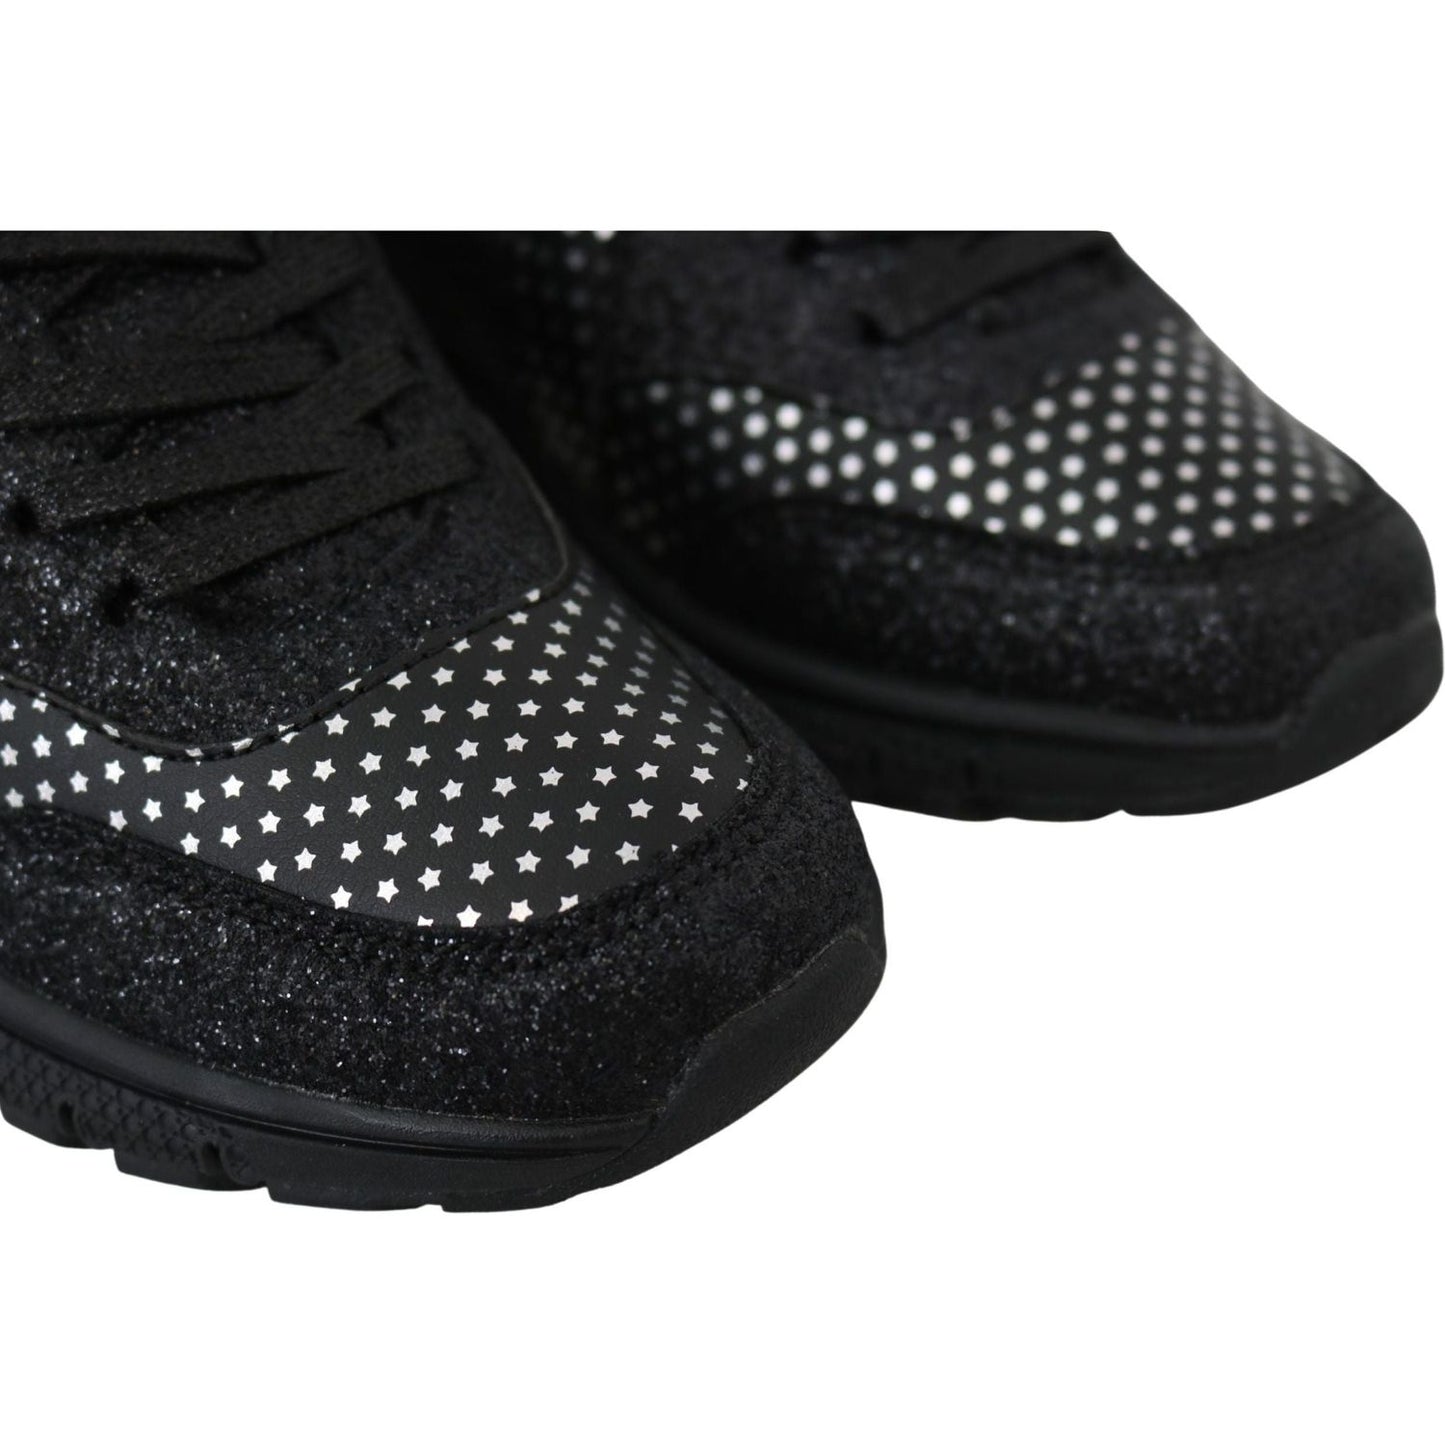 Plein Sport Elegant Black Runner Jasmines Sport Shoes black-polyester-runner-jasmines-sneakers-shoes